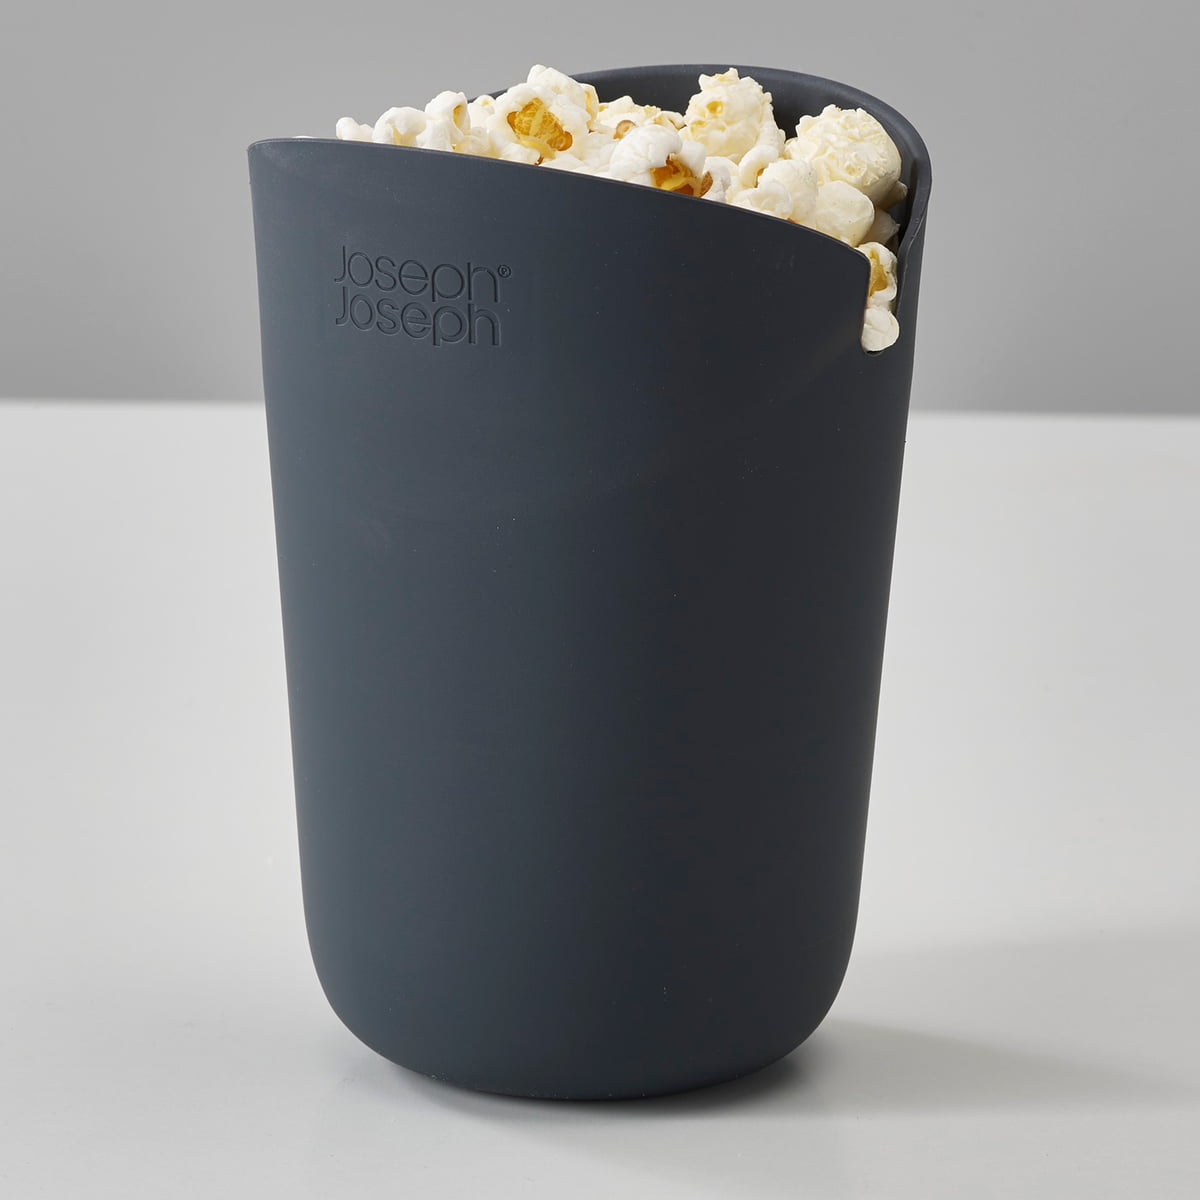 Joseph Joseph M-Cuisine Microwave Popcorn Maker with Kernel Filter